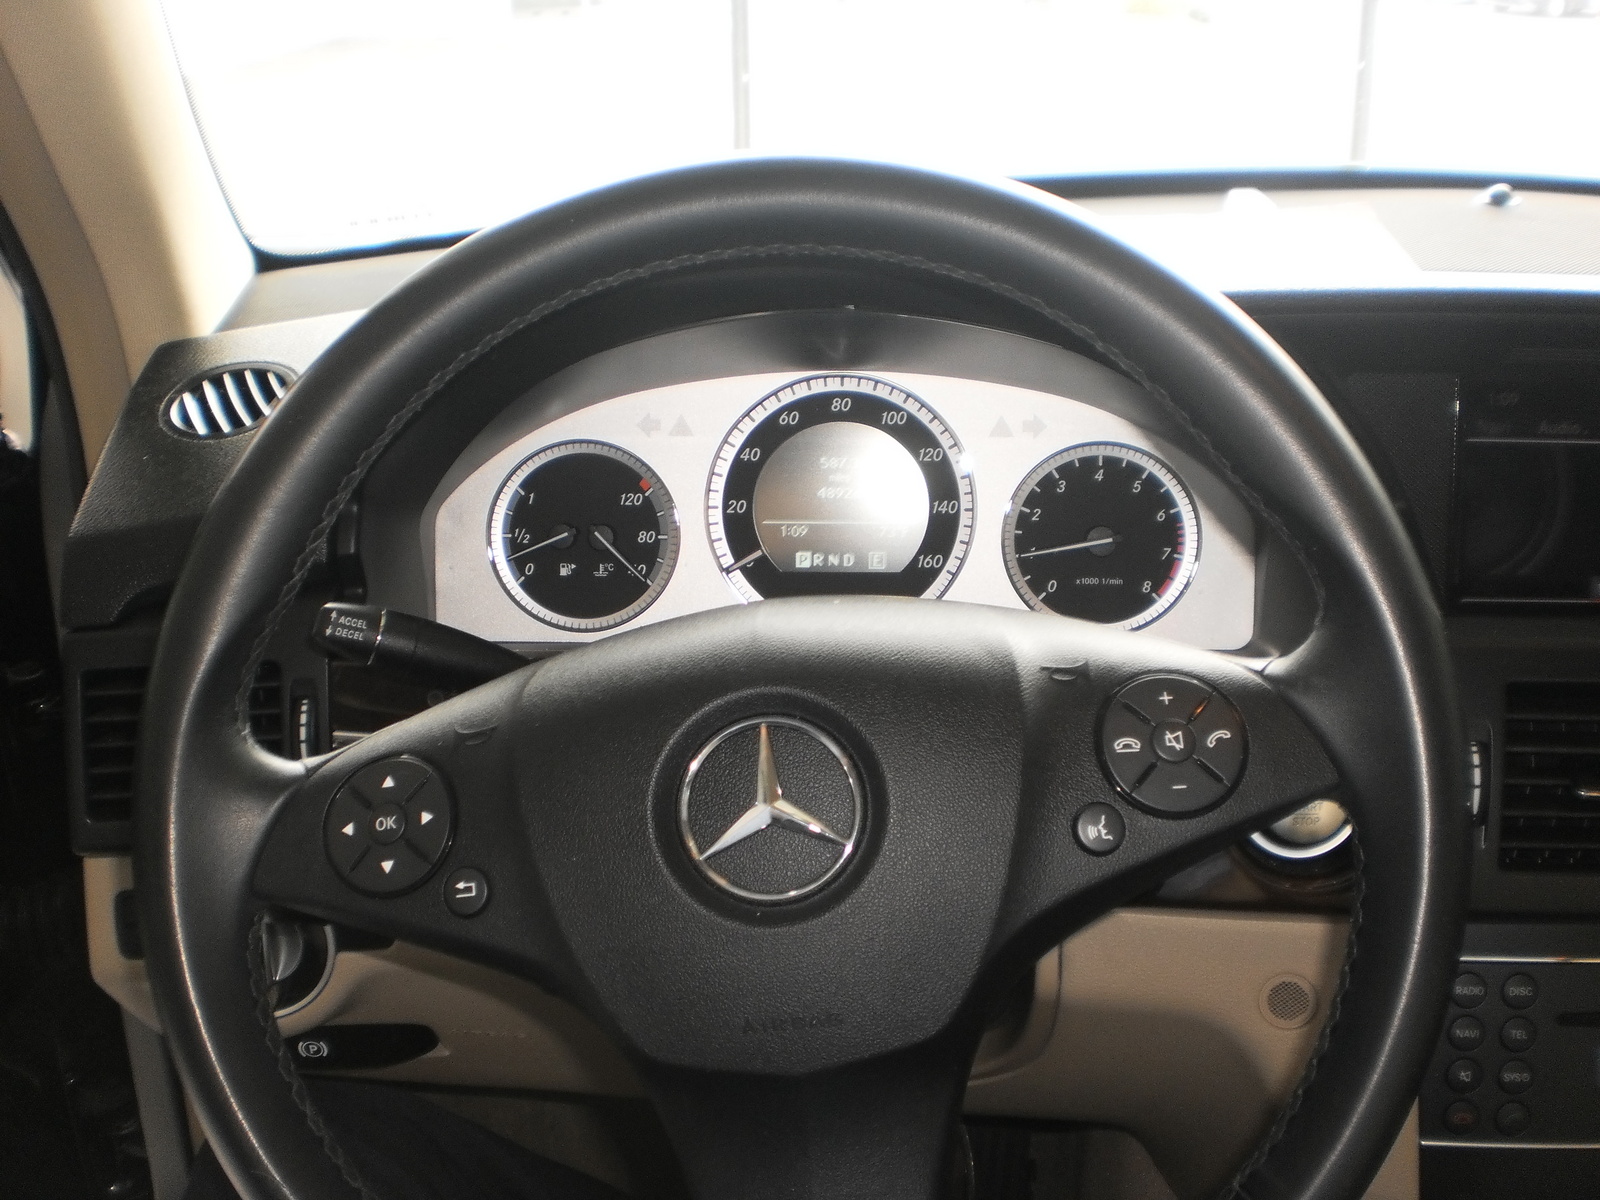 2012 Mercedes glk 350 safety ratings #4